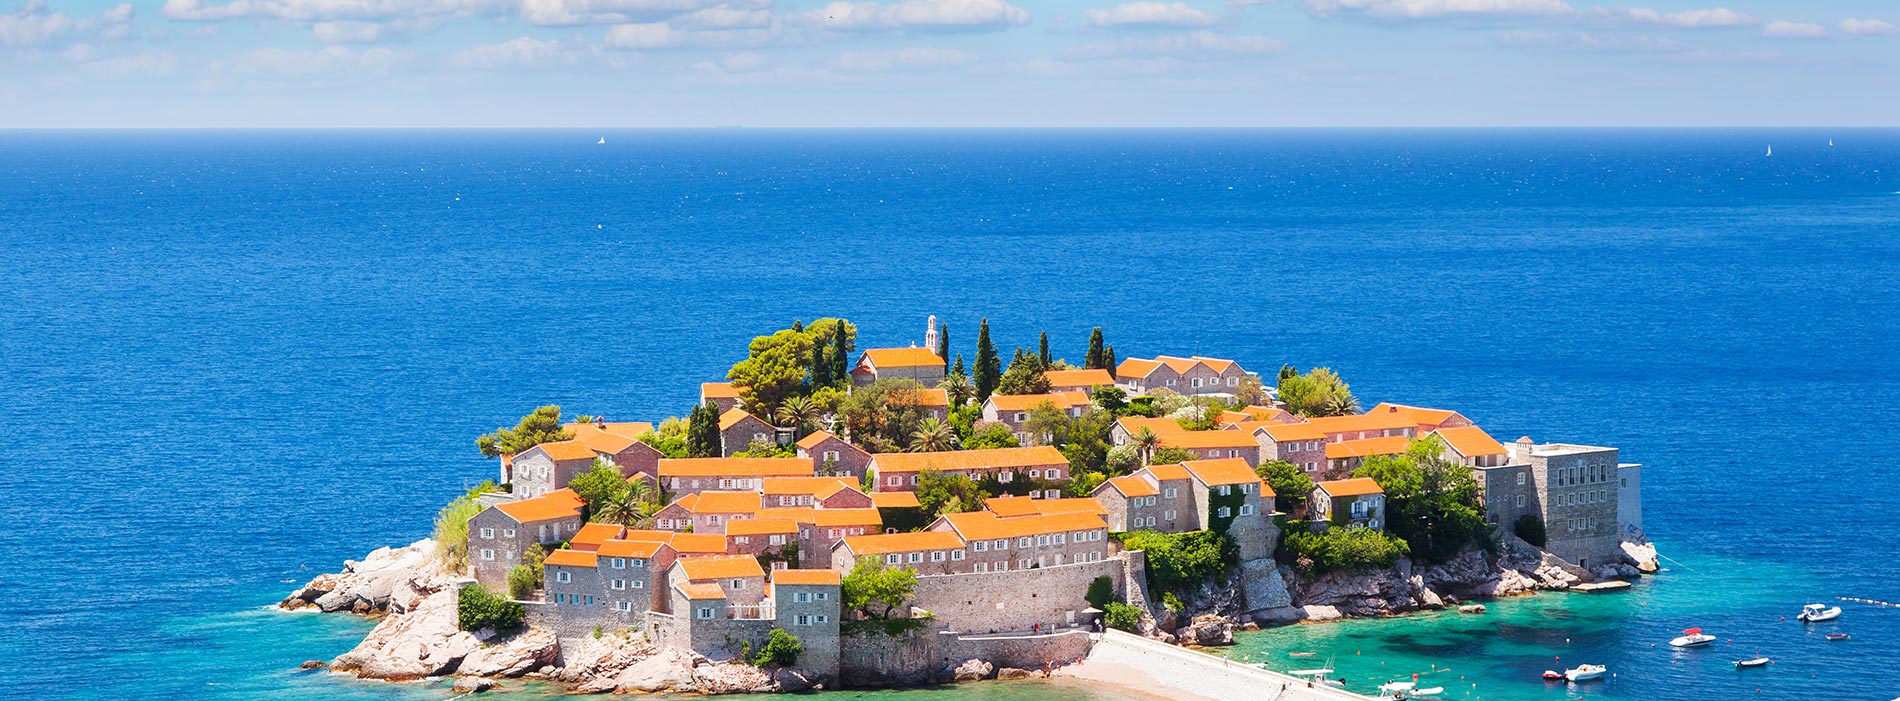 Sveti Stefan, small islet and resort in Montenegro.jpg